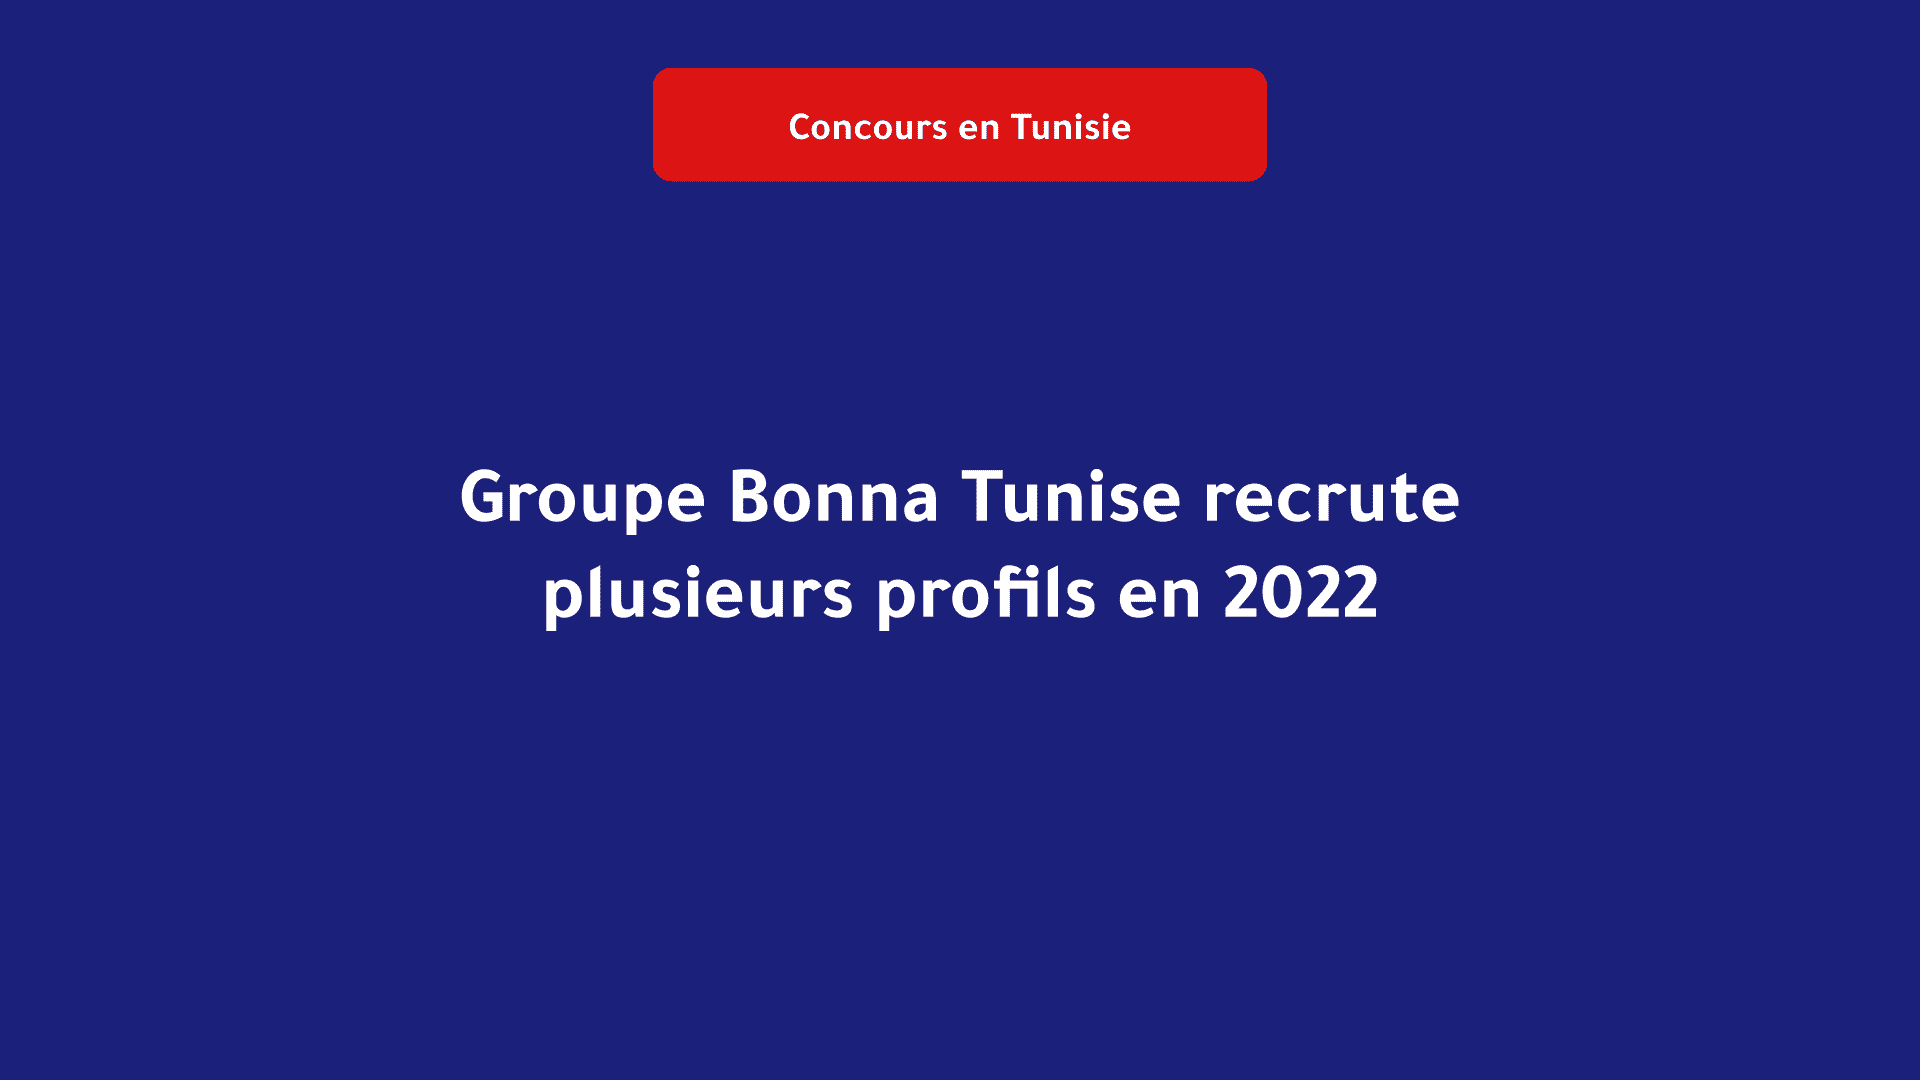 Groupe Bonna Tunise recrute plusieurs profils